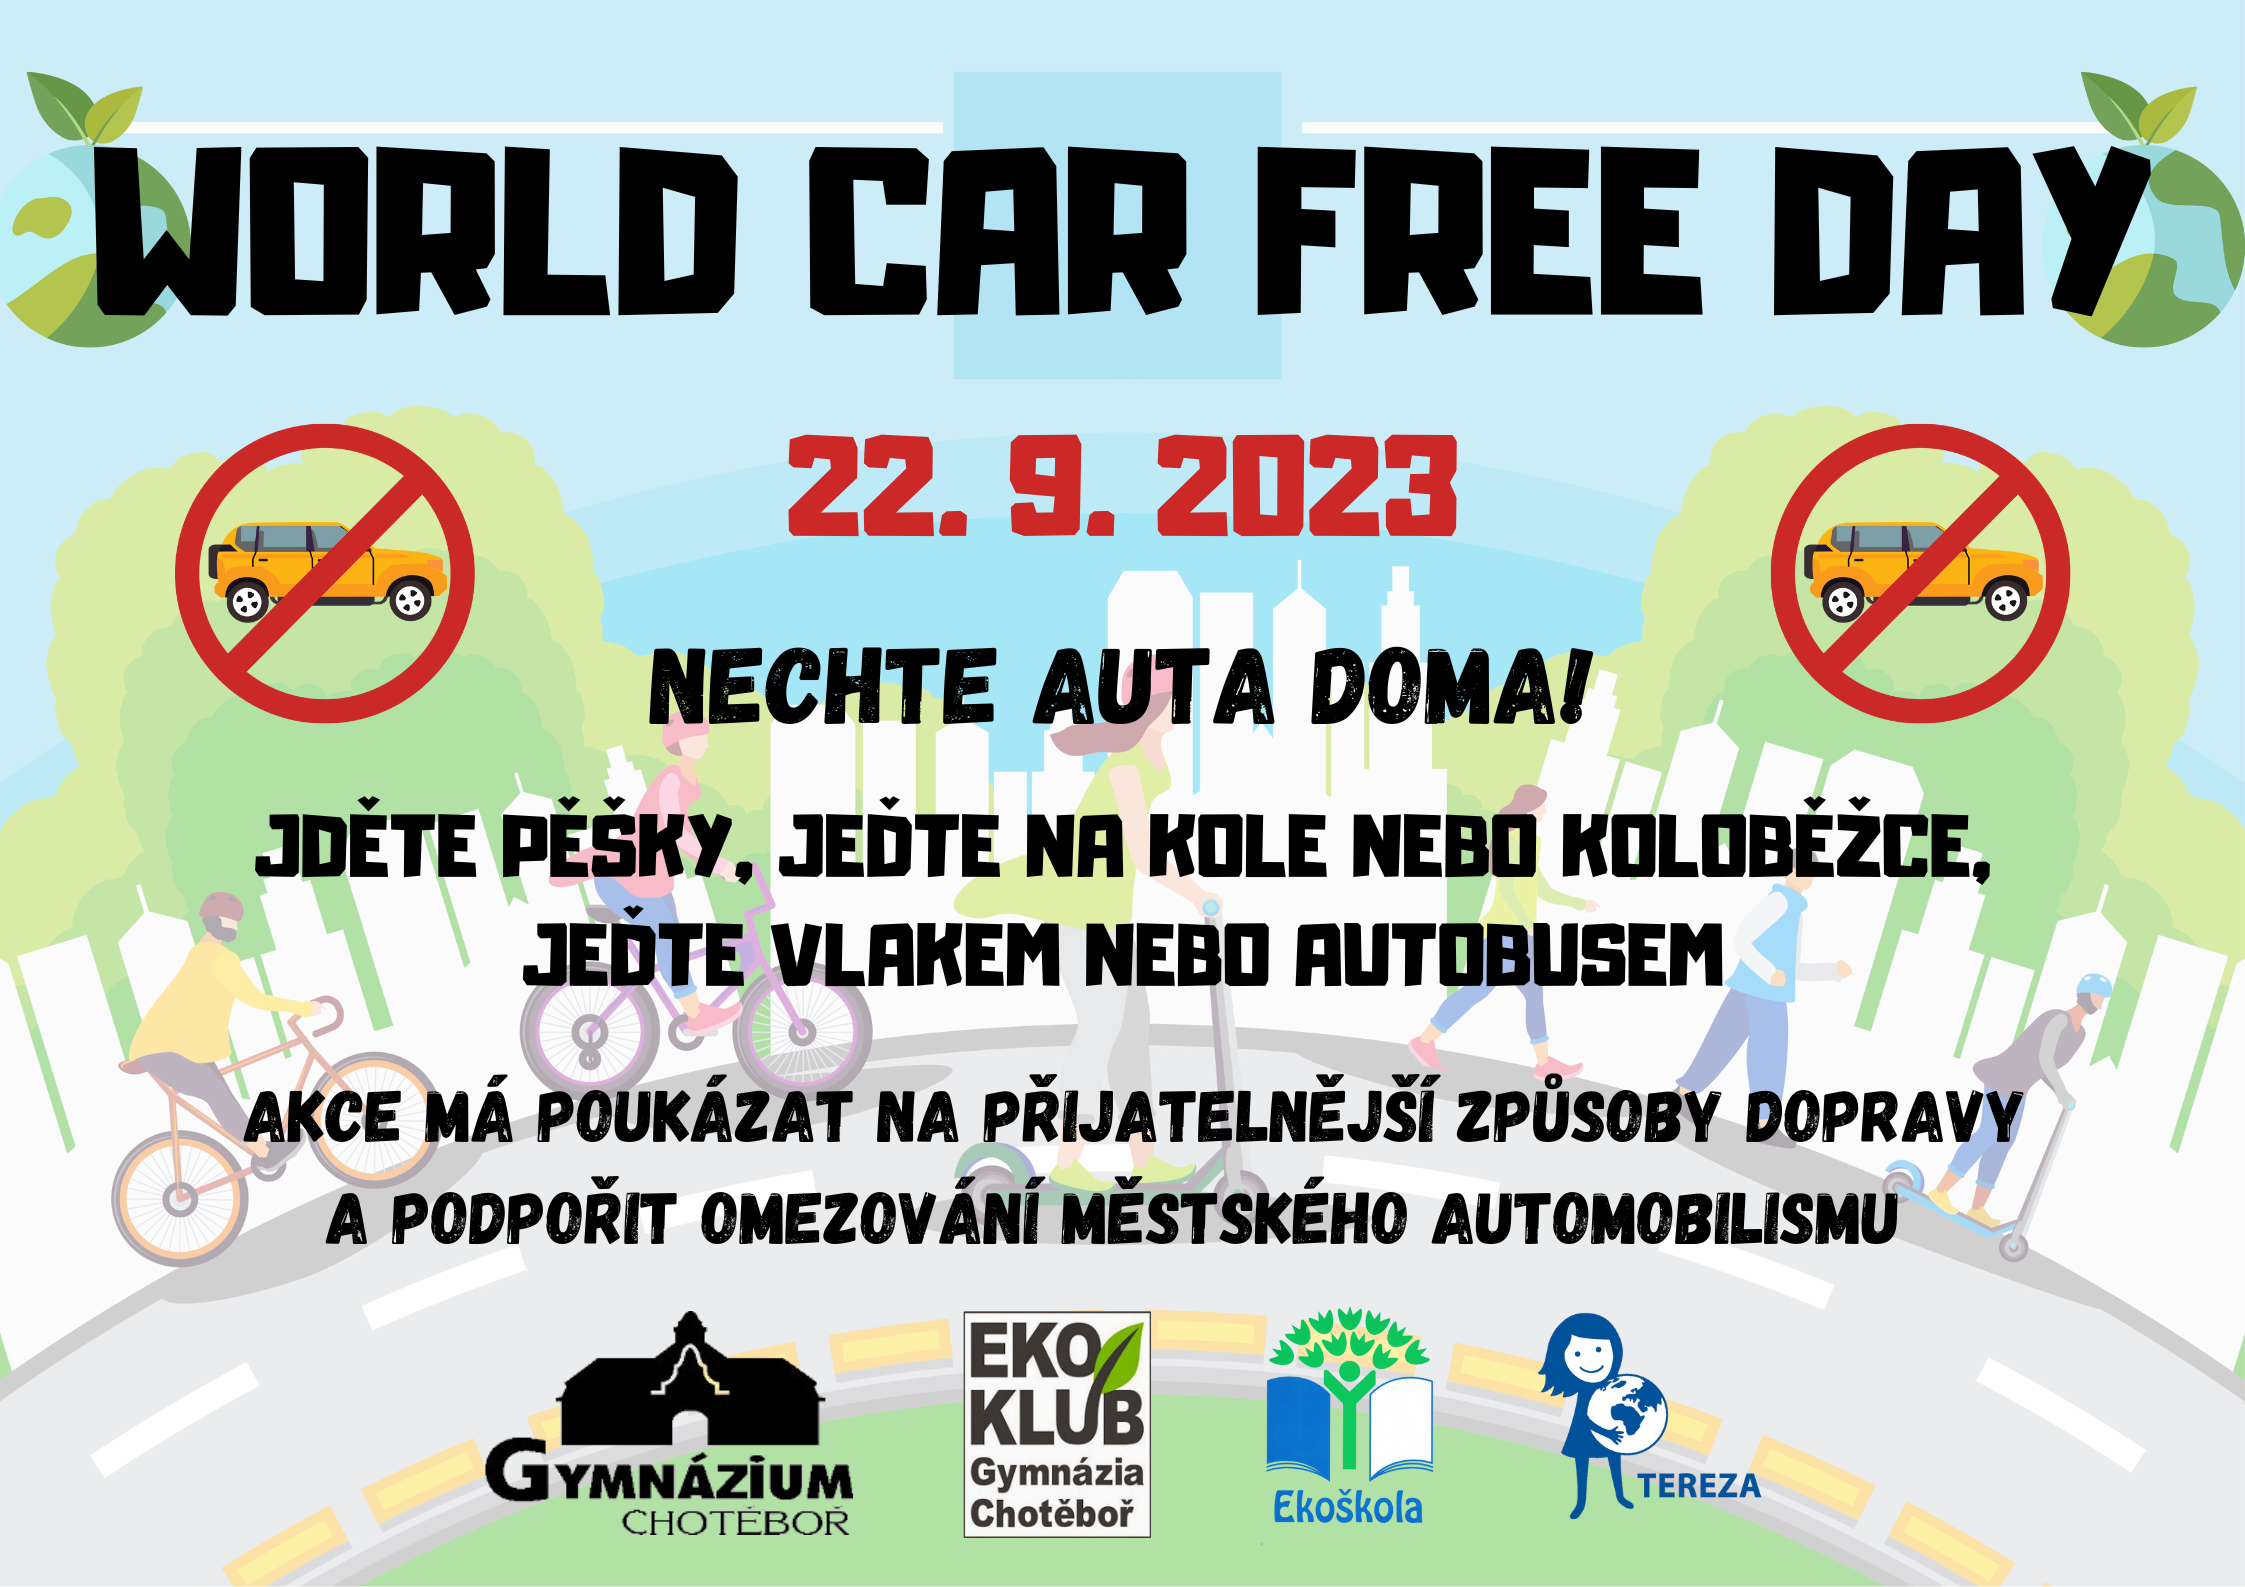 World car free day 2023